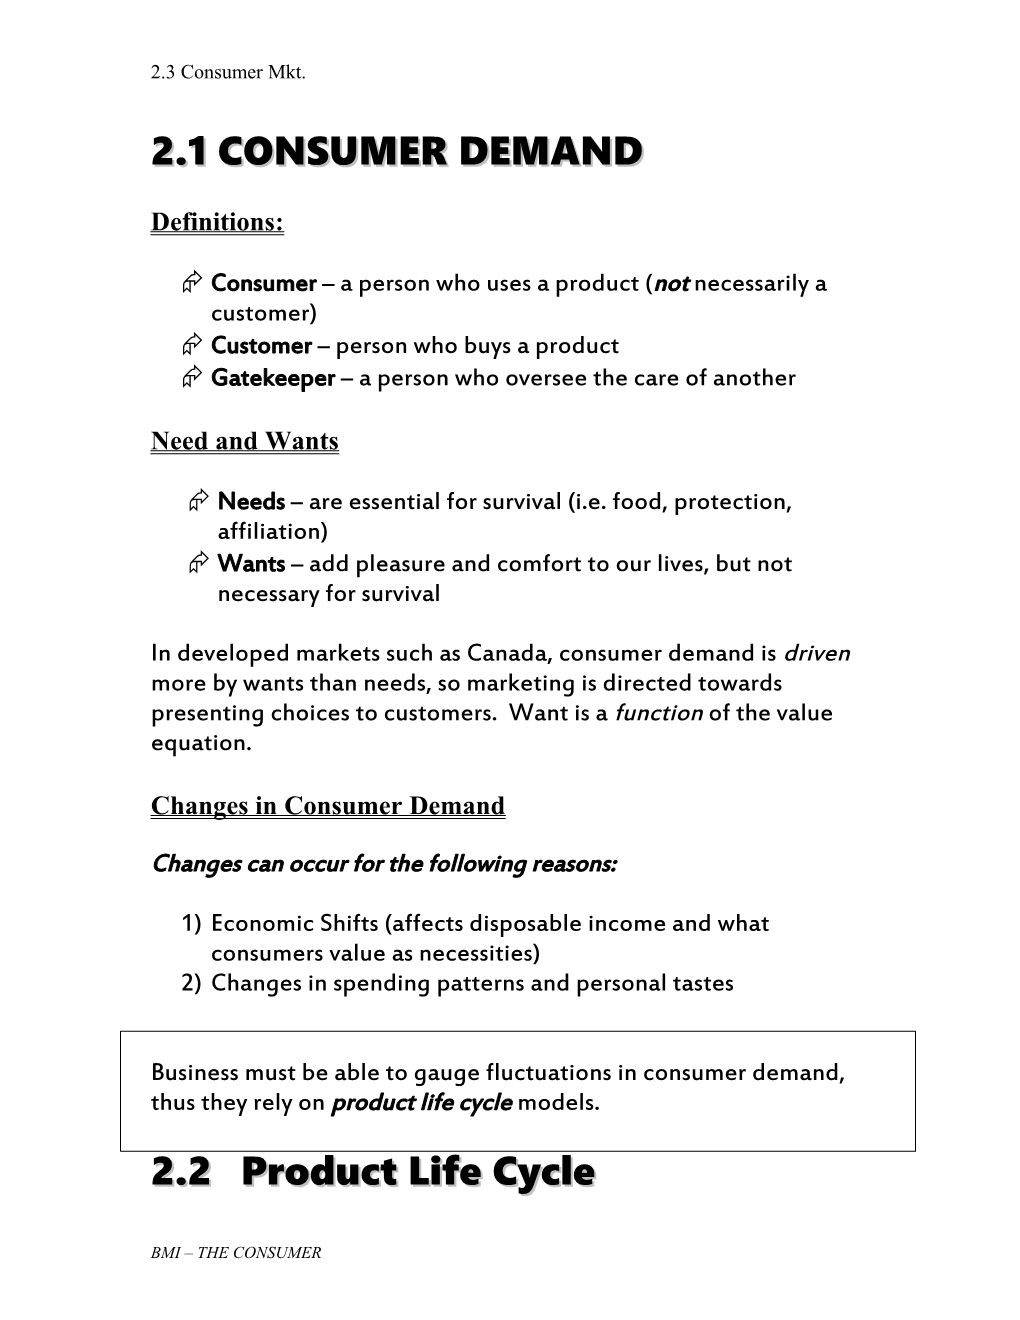 2.1 Consumer Demand